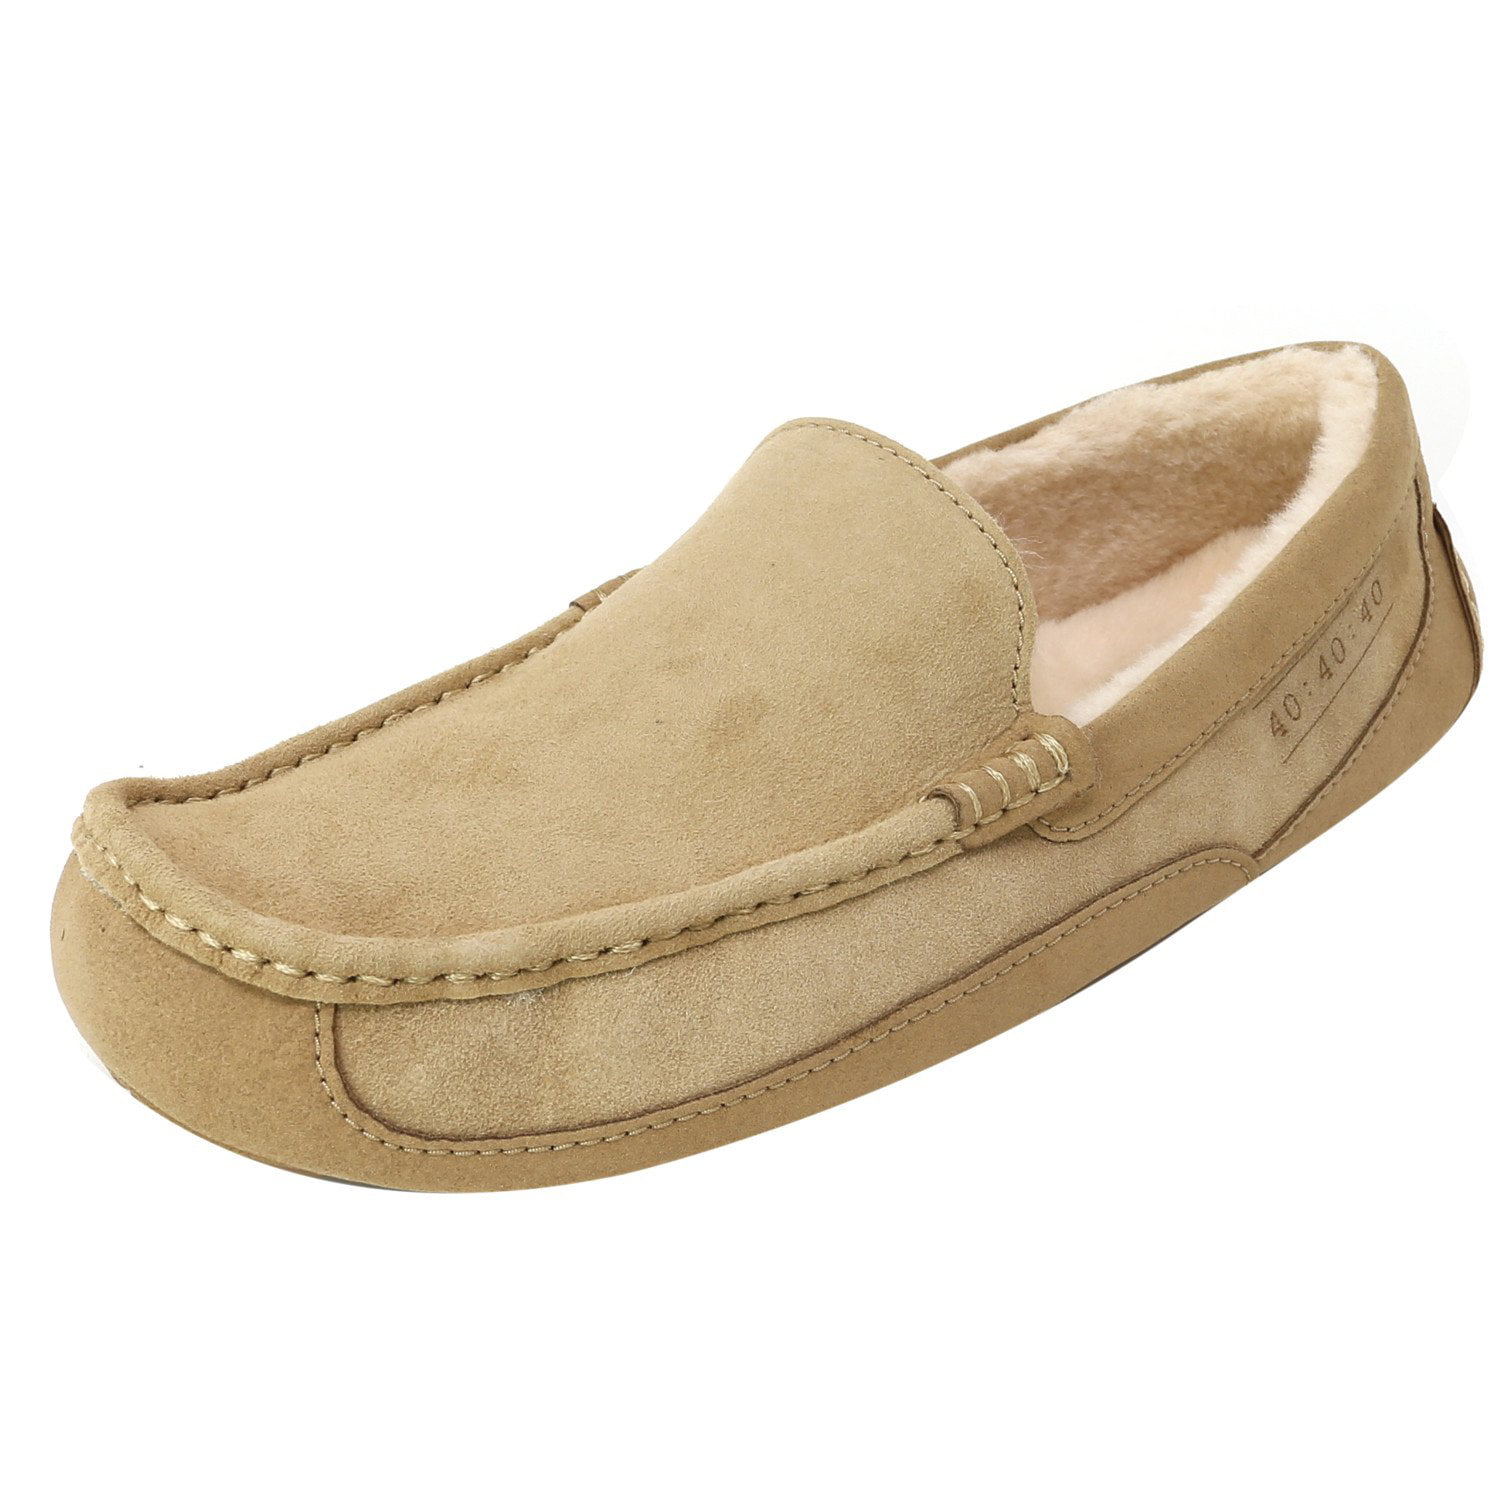 Ugg Men's Ascot Sand Ankle-High Leather Slipper - 9M - Walmart.com